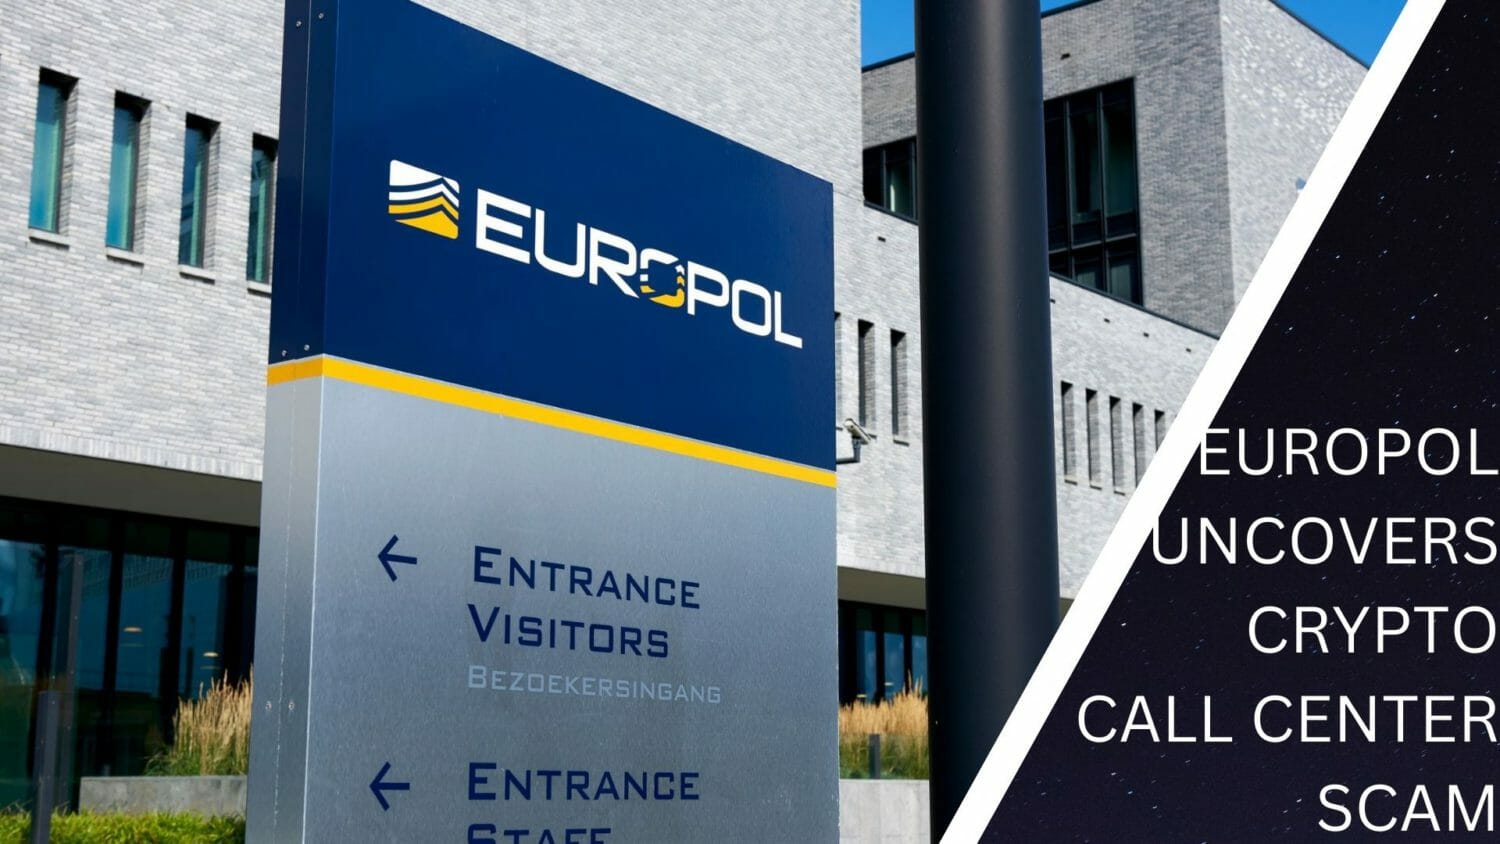 Europol Uncovers Crypto Call Center Scam